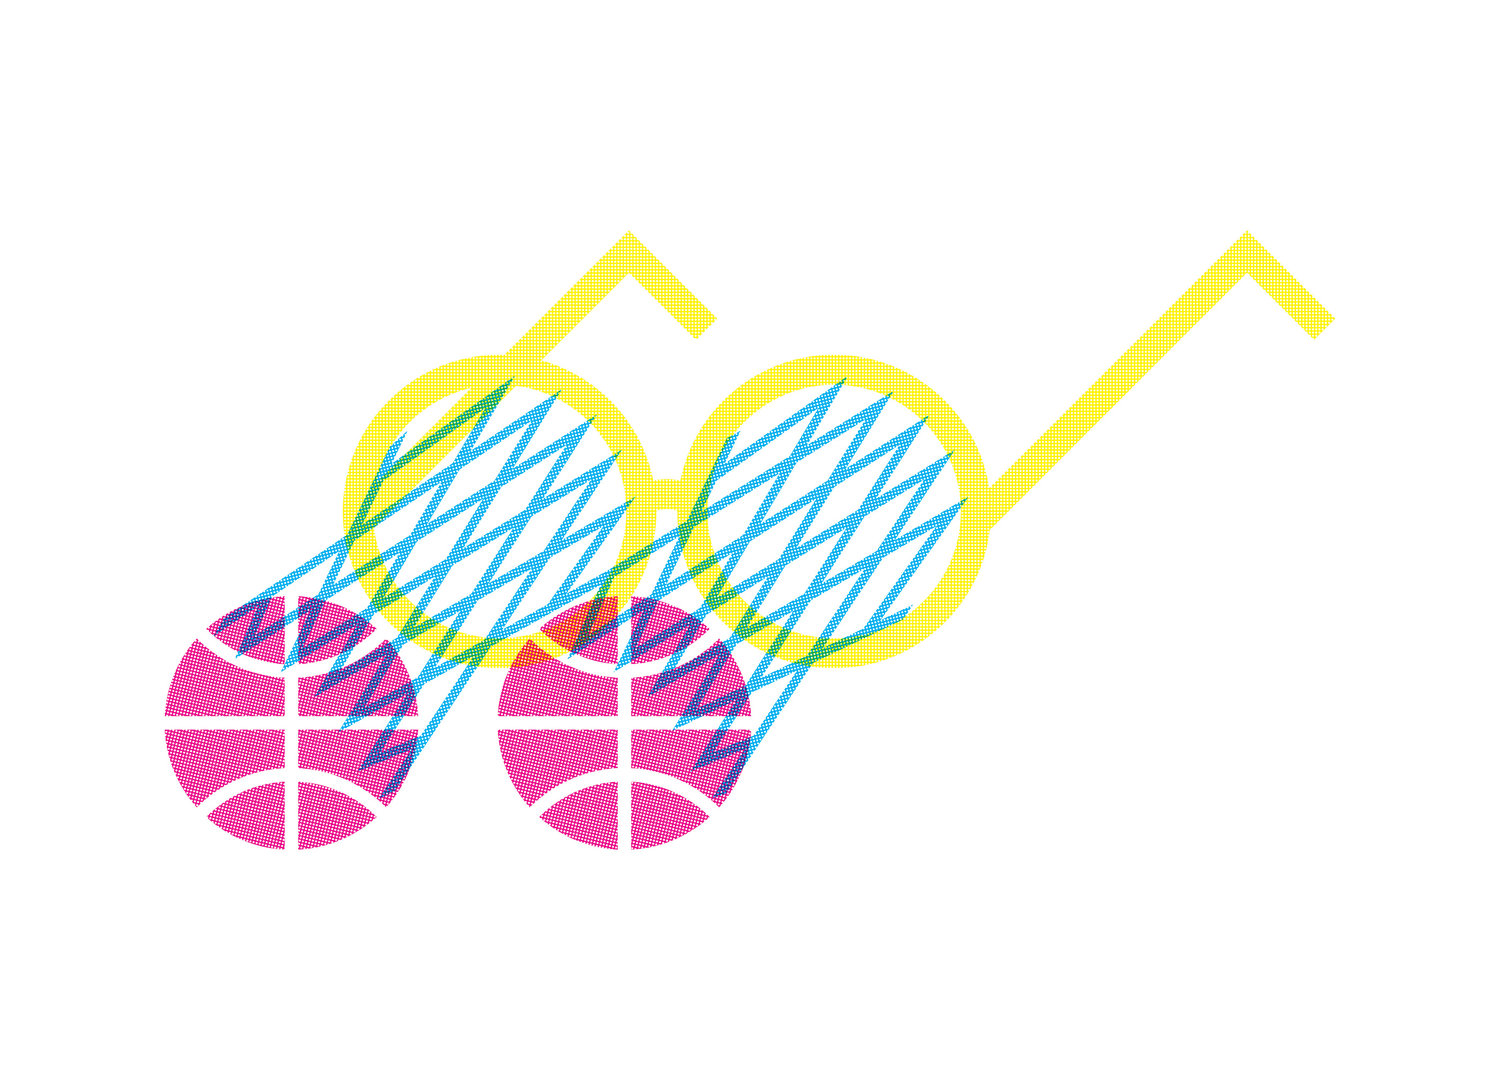 illustration_andre_levy_zhion_vector_conceptual_minimal_sports_reading_press_retro_pictogram_glasses_basketball.jpg